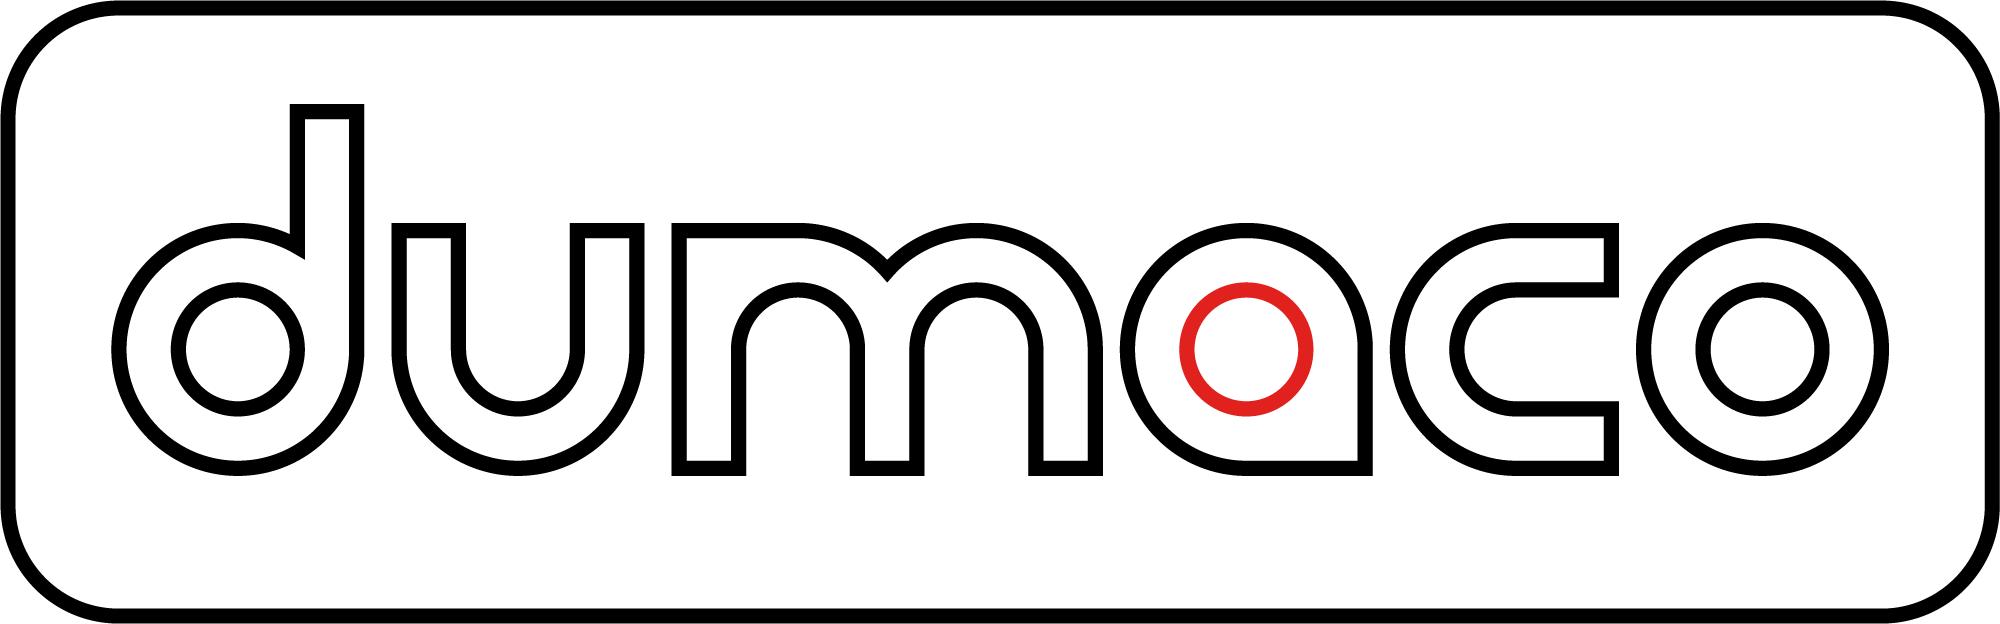 Dumaco logo